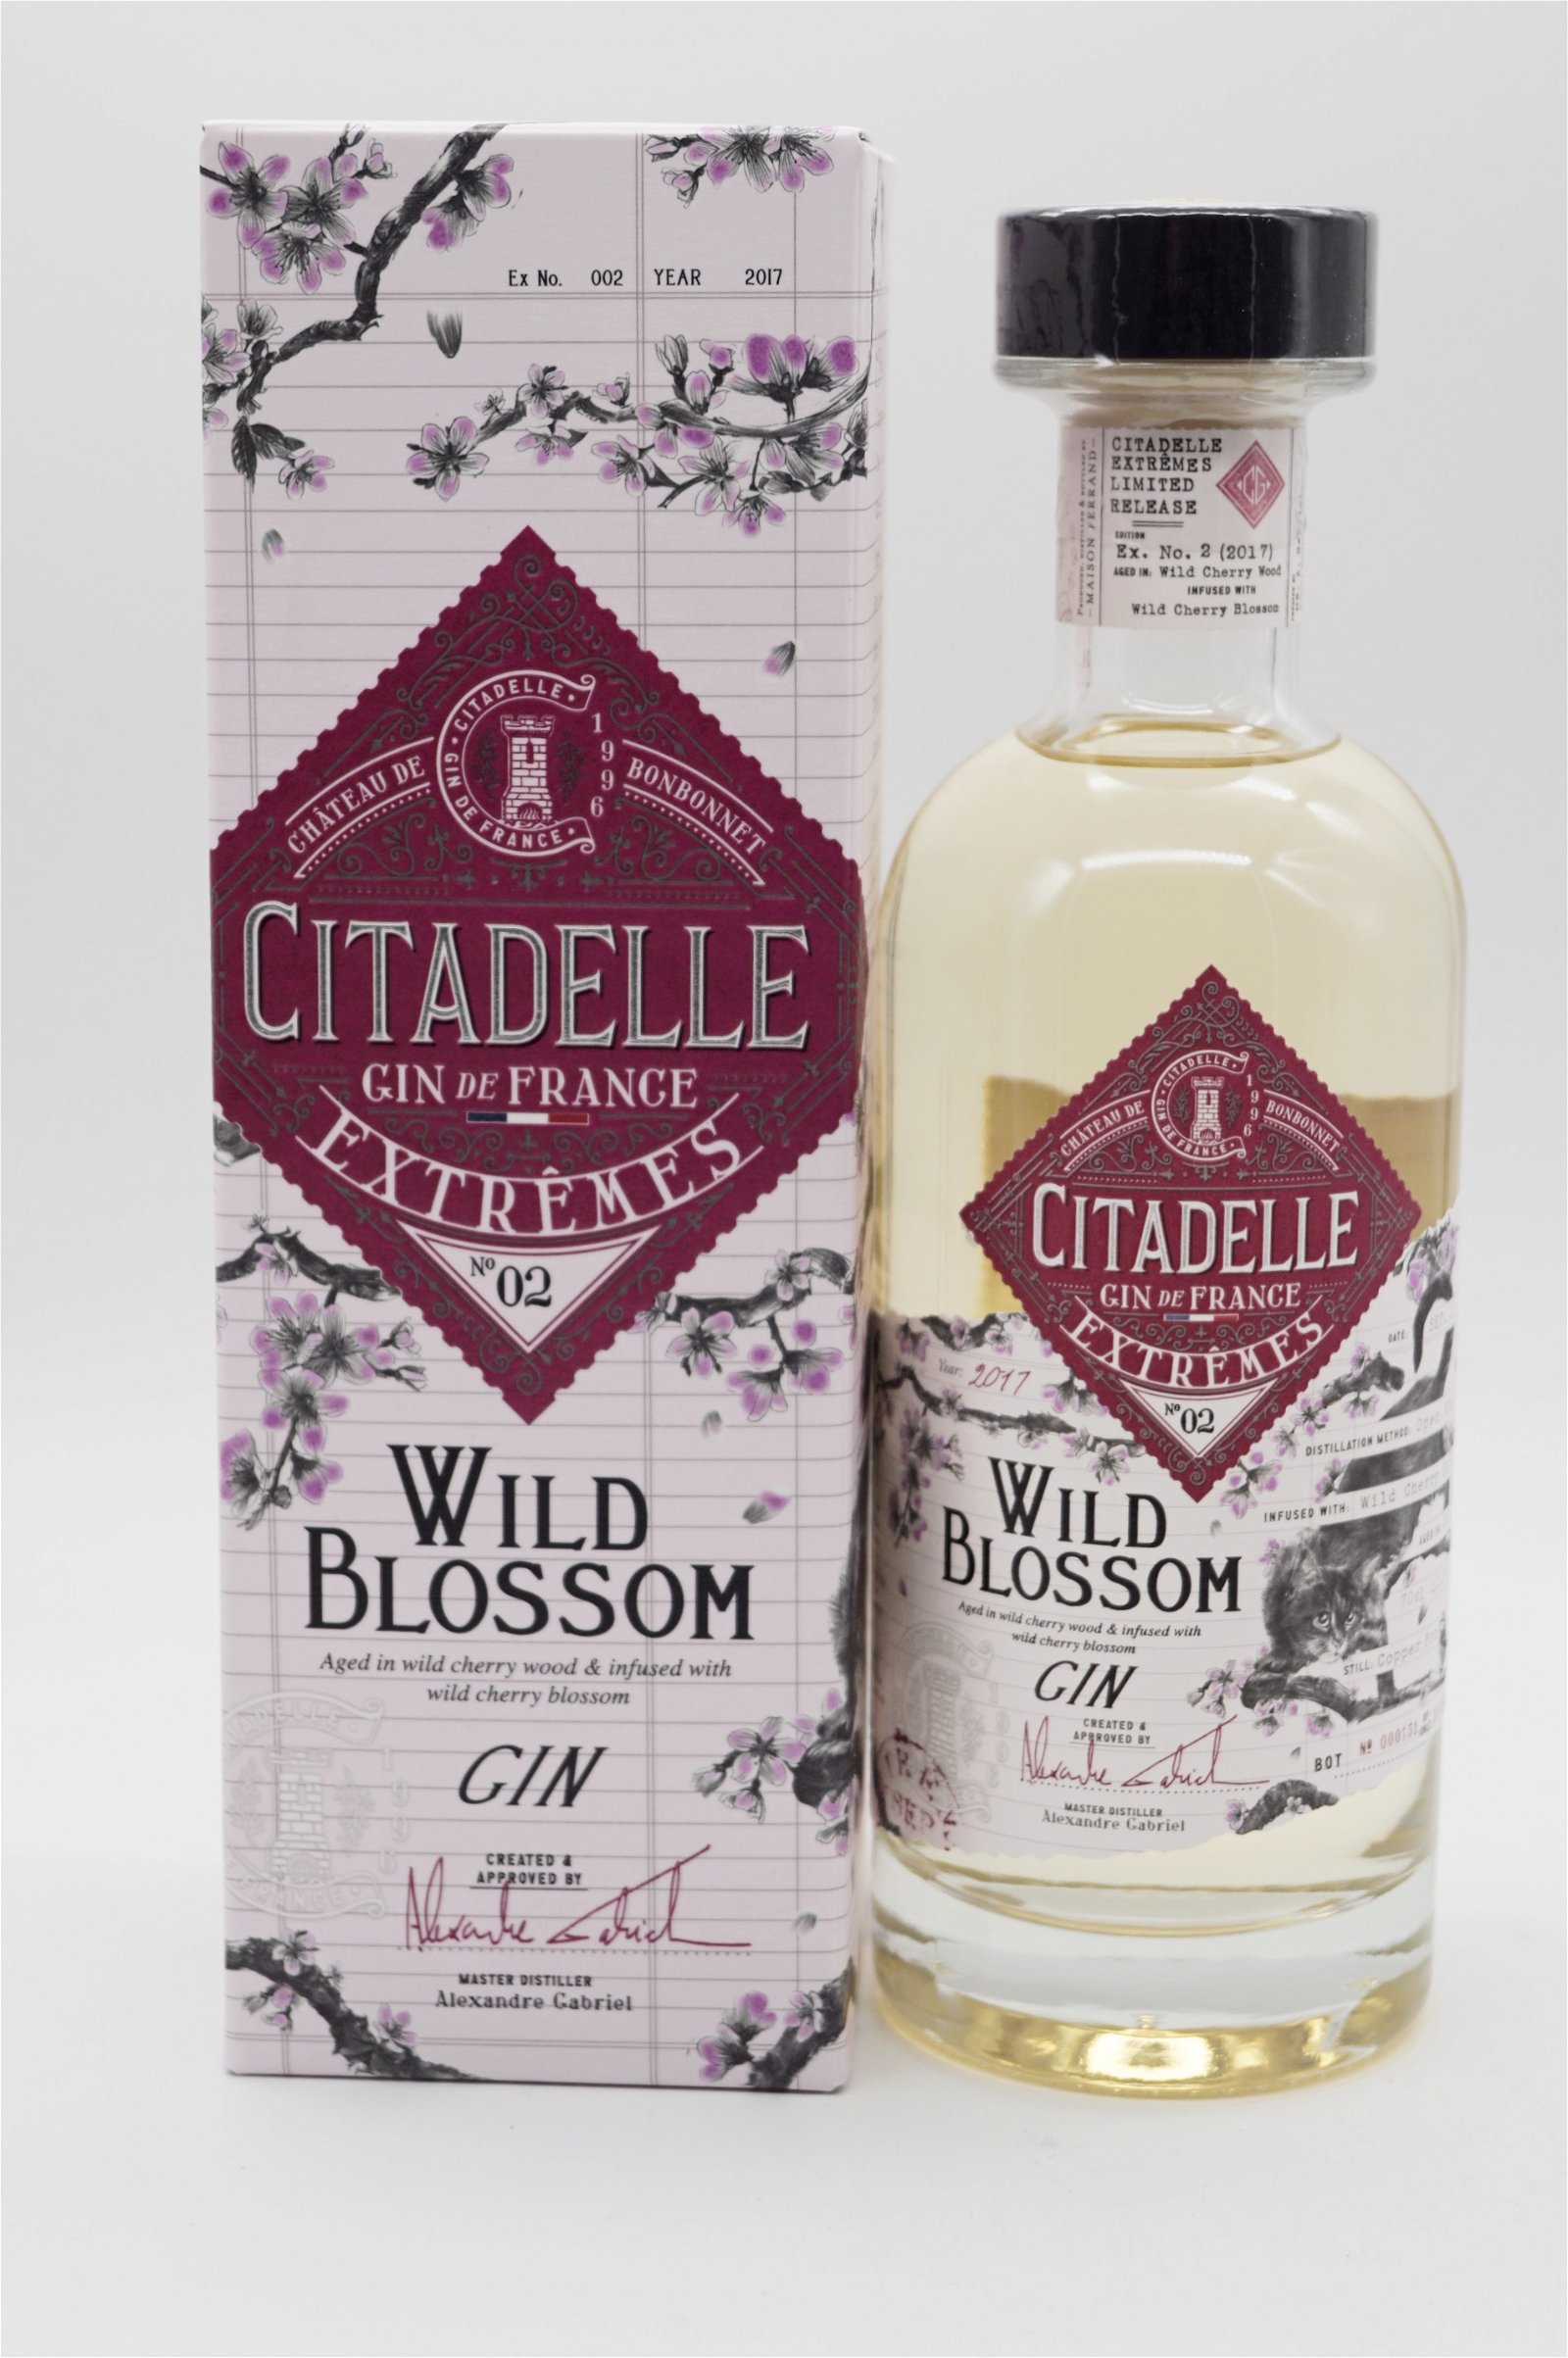 Citadelle Extremes No 2 Wild Blosssom Gin